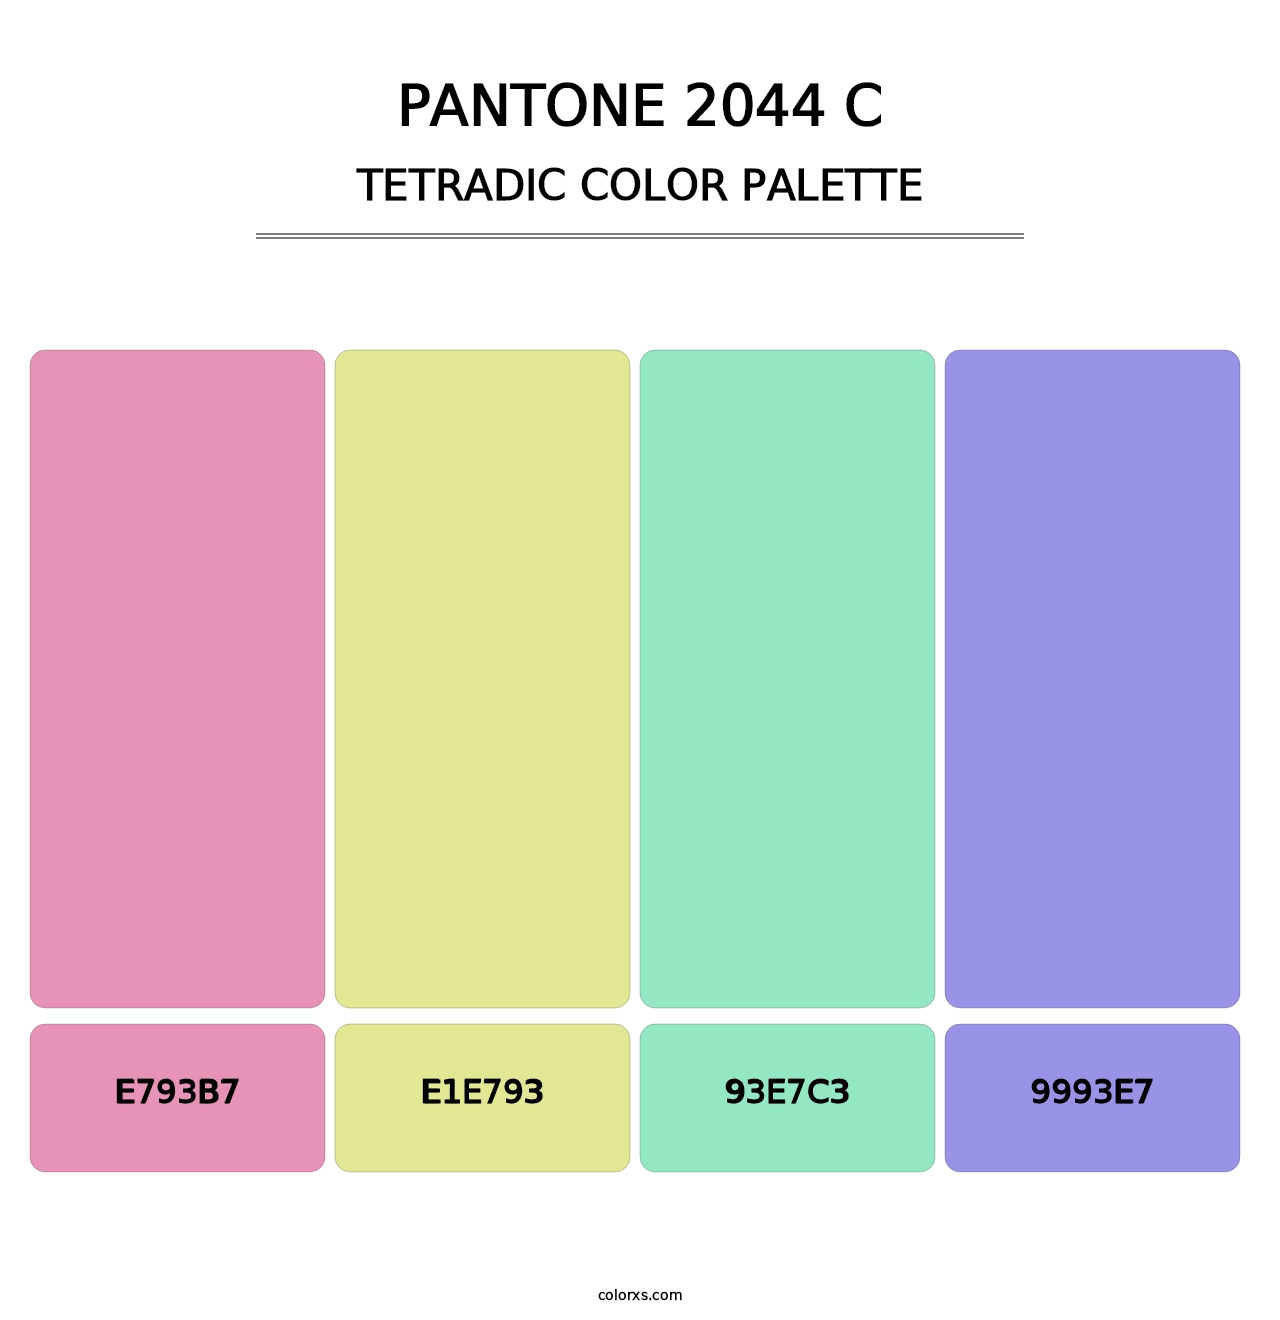 PANTONE 2044 C - Tetradic Color Palette